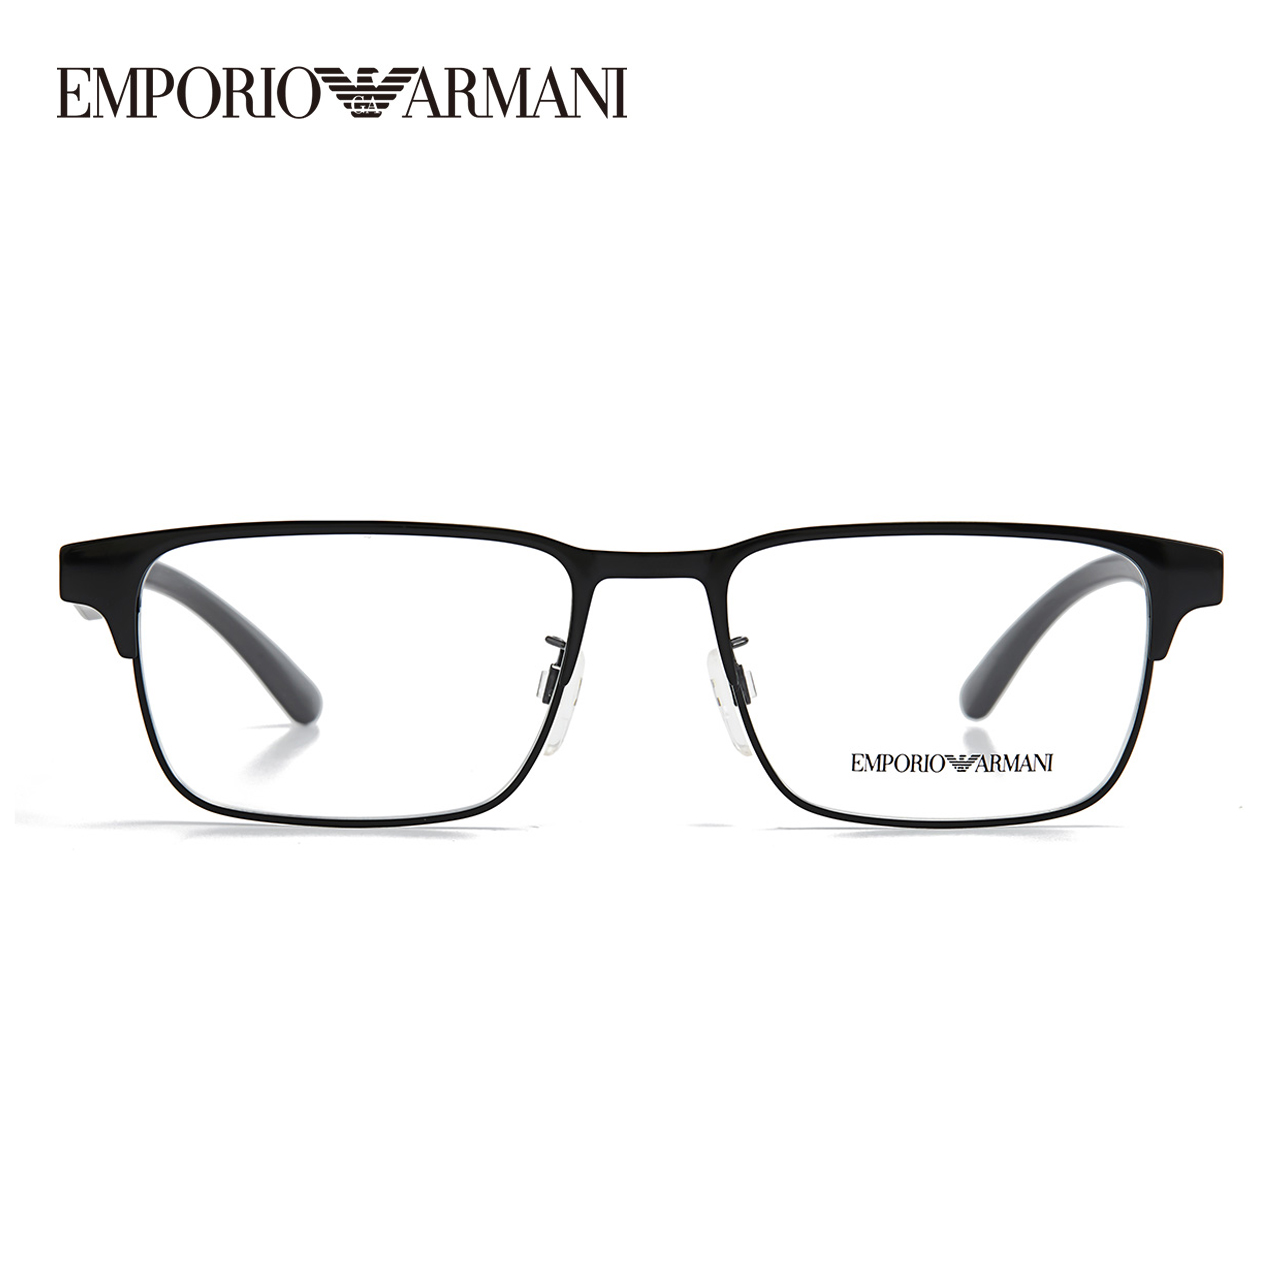 EMPORIO ARMANI ARMANI阿玛尼眼镜框商务黑框眼镜架男士全框眼镜配近视镜片1121 78